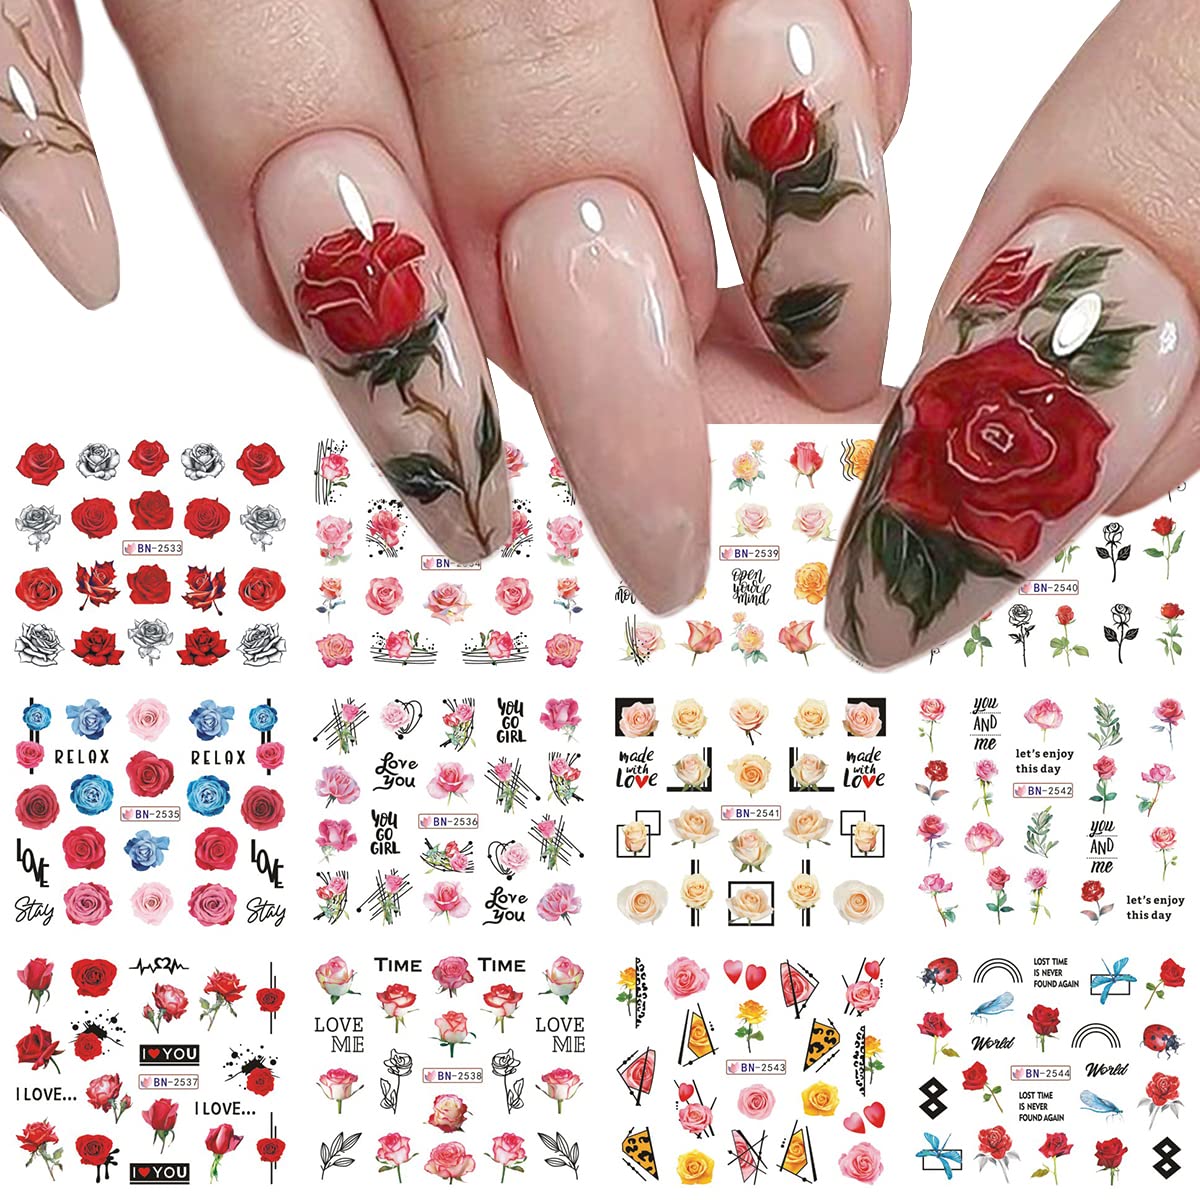 14 Beautiful Rose Nail Art Designs - Pretty Designs